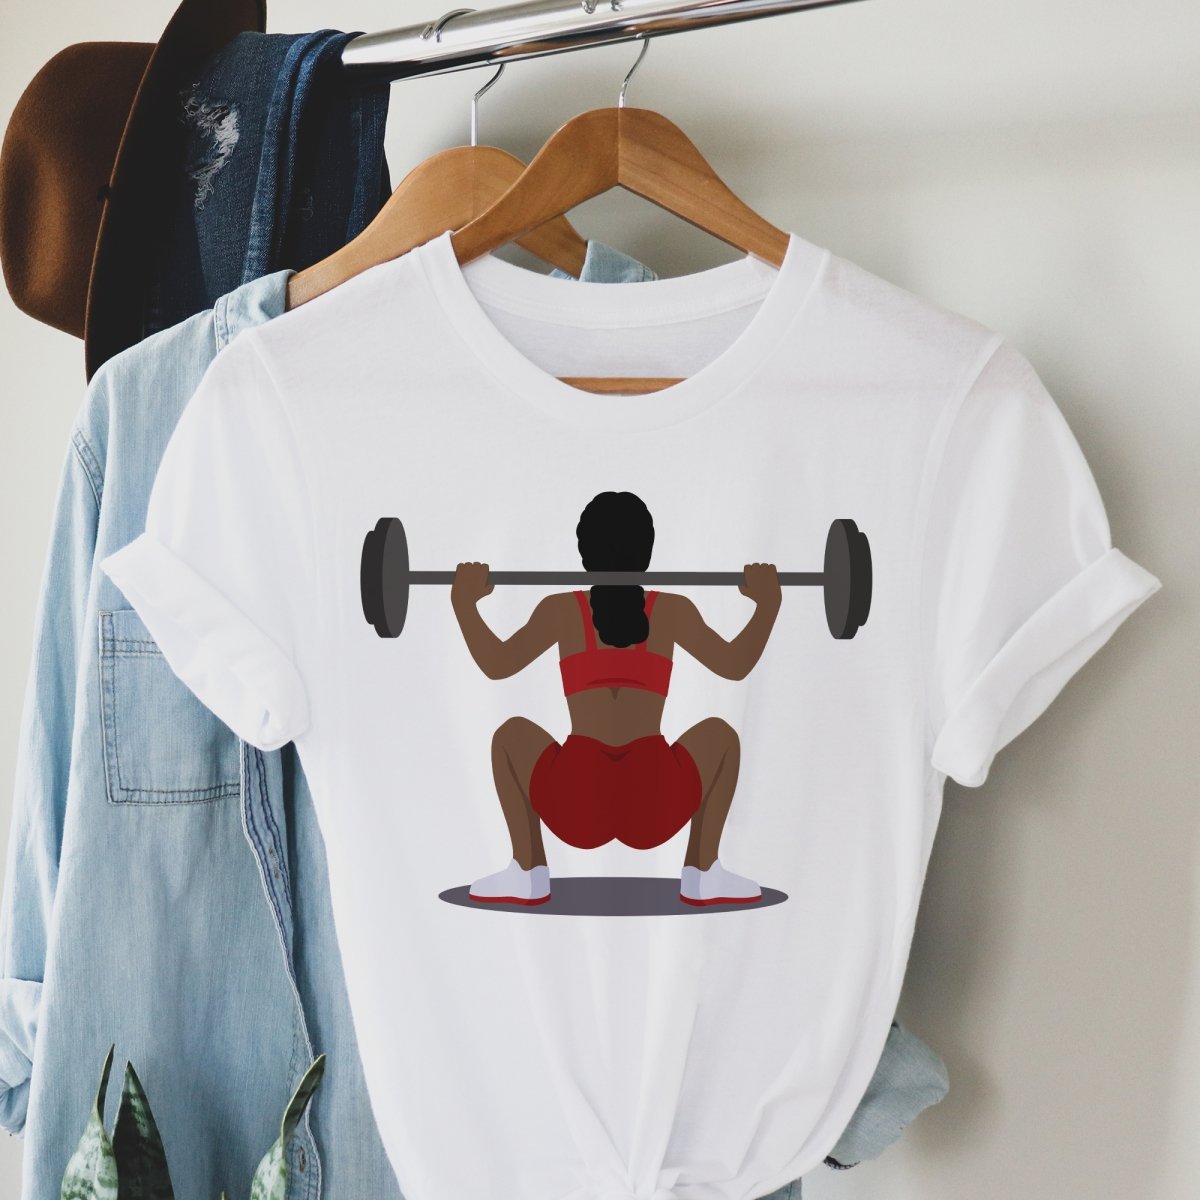 weight lifting shirt